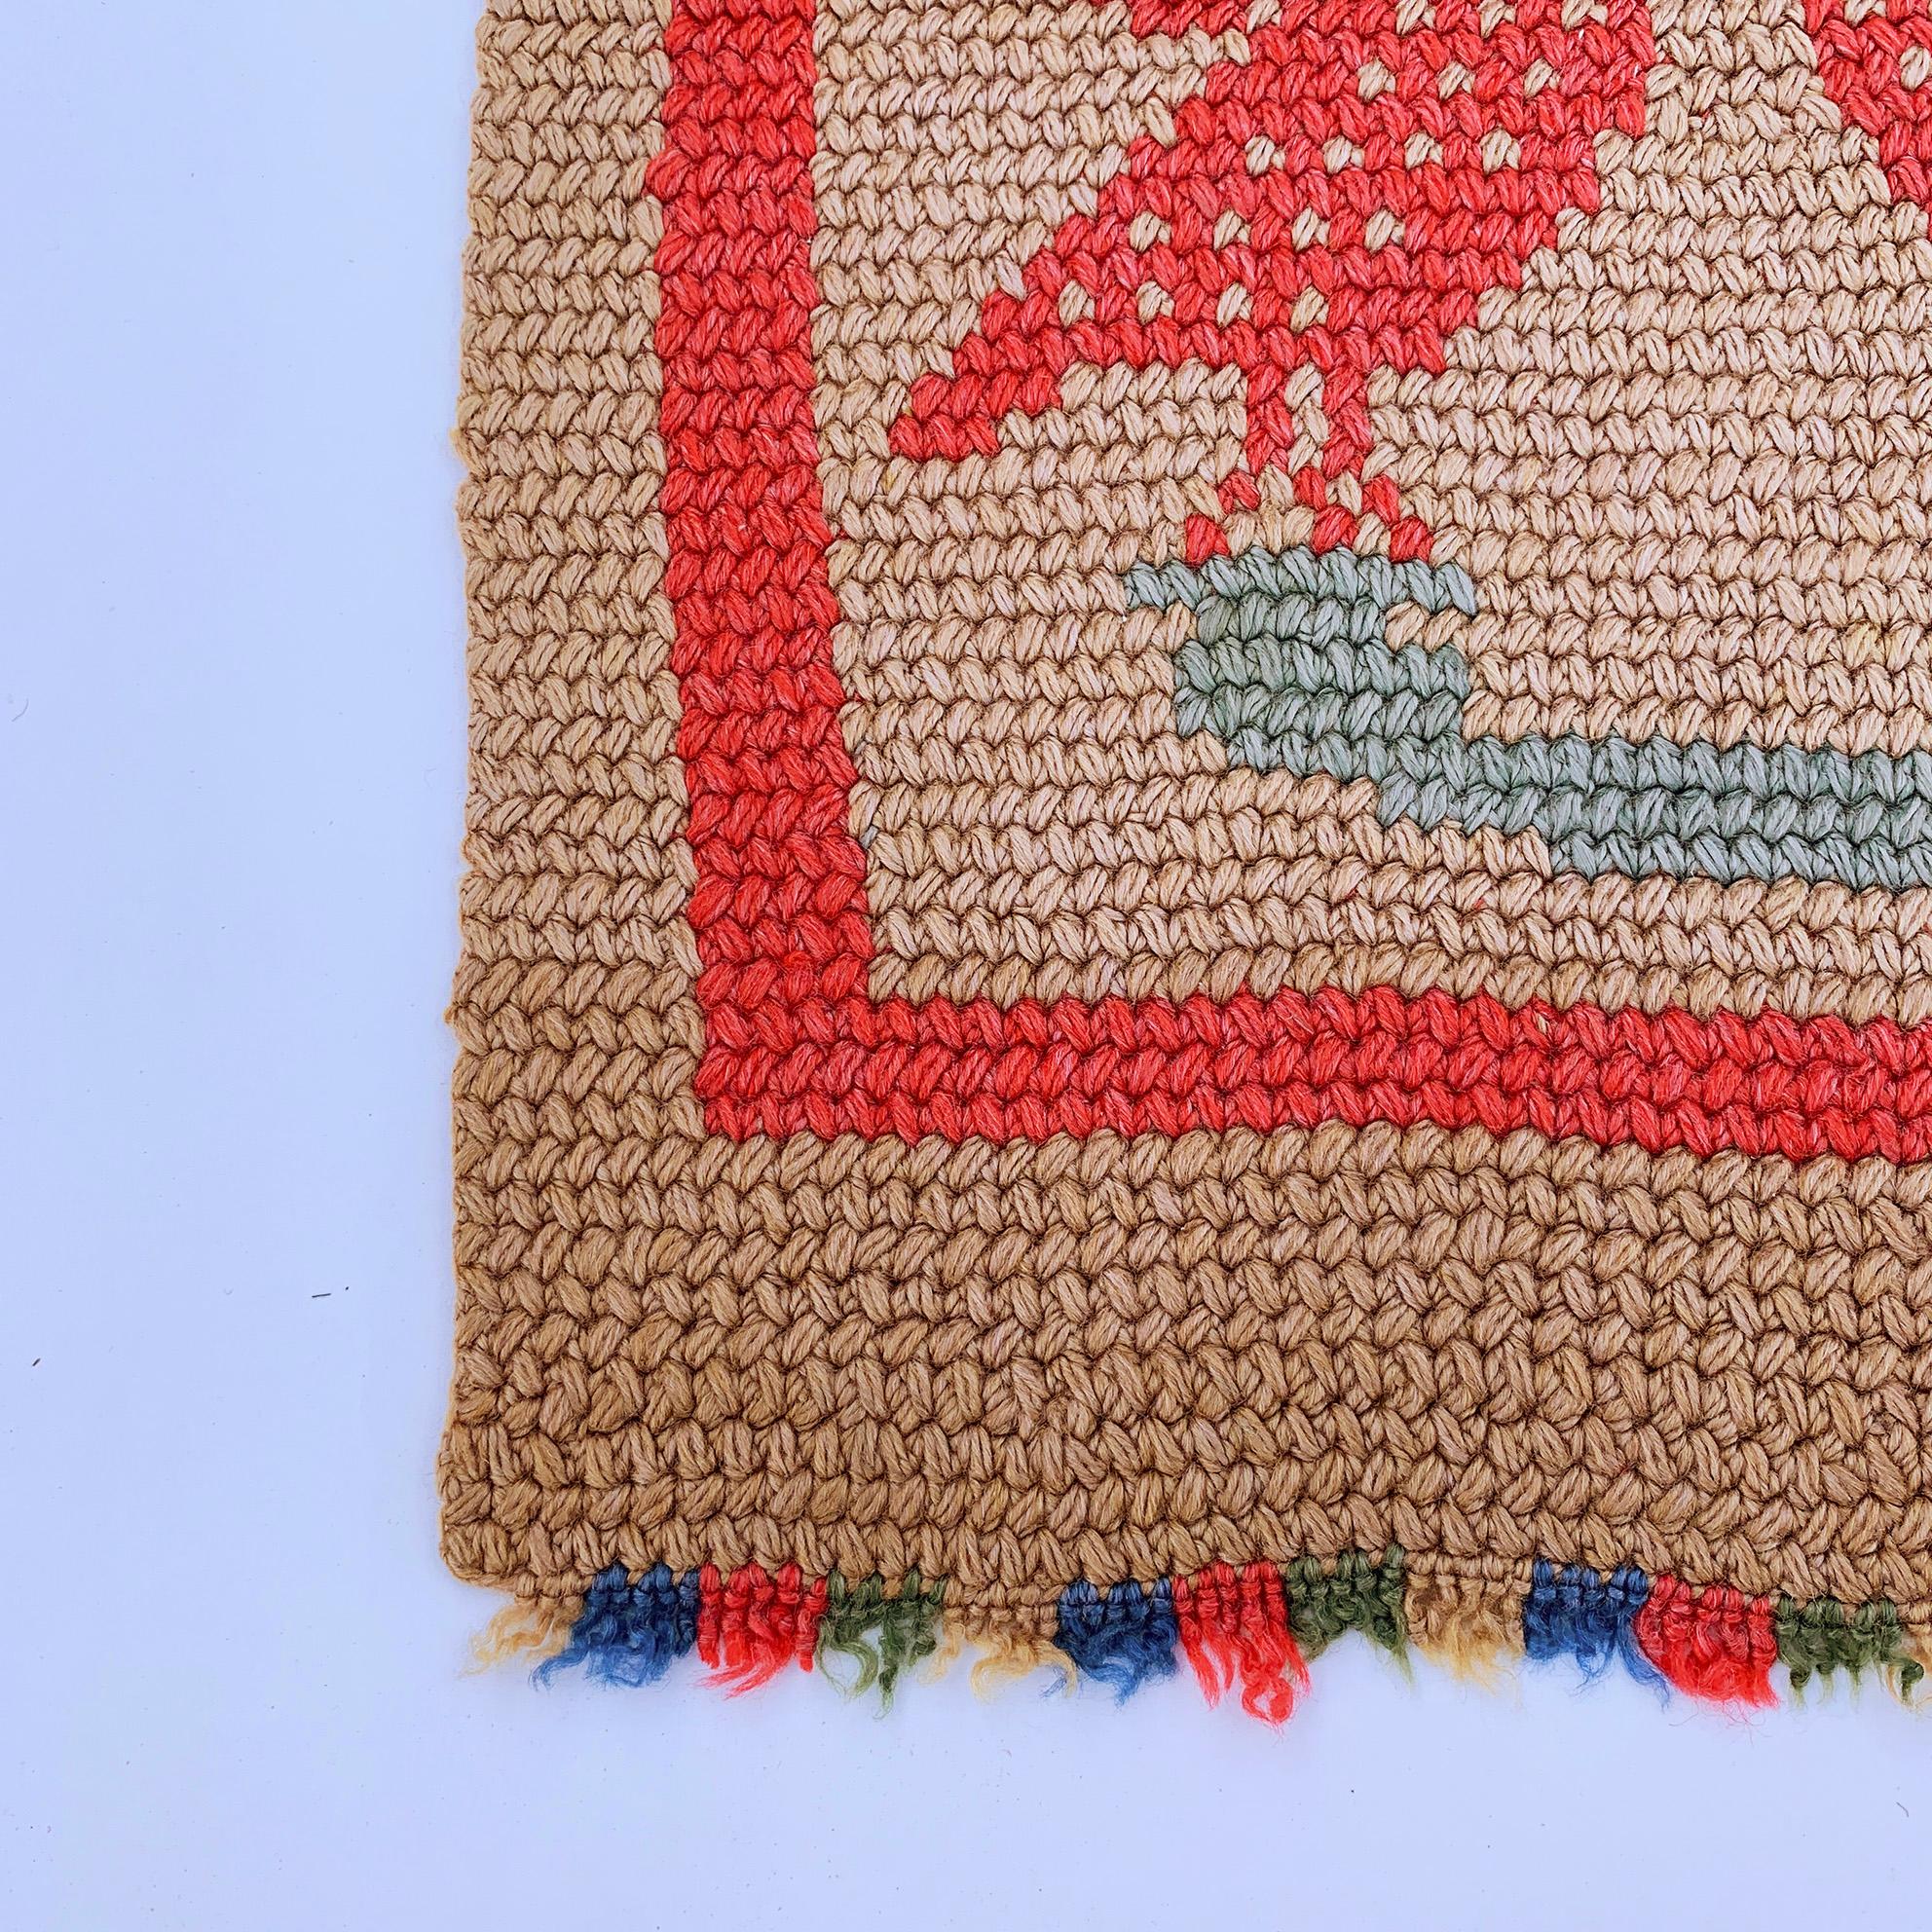 Early 20th Century Crochet Birds Runner Small Rug 1920s Vintage Wool Christmas Wall Hanging Floor